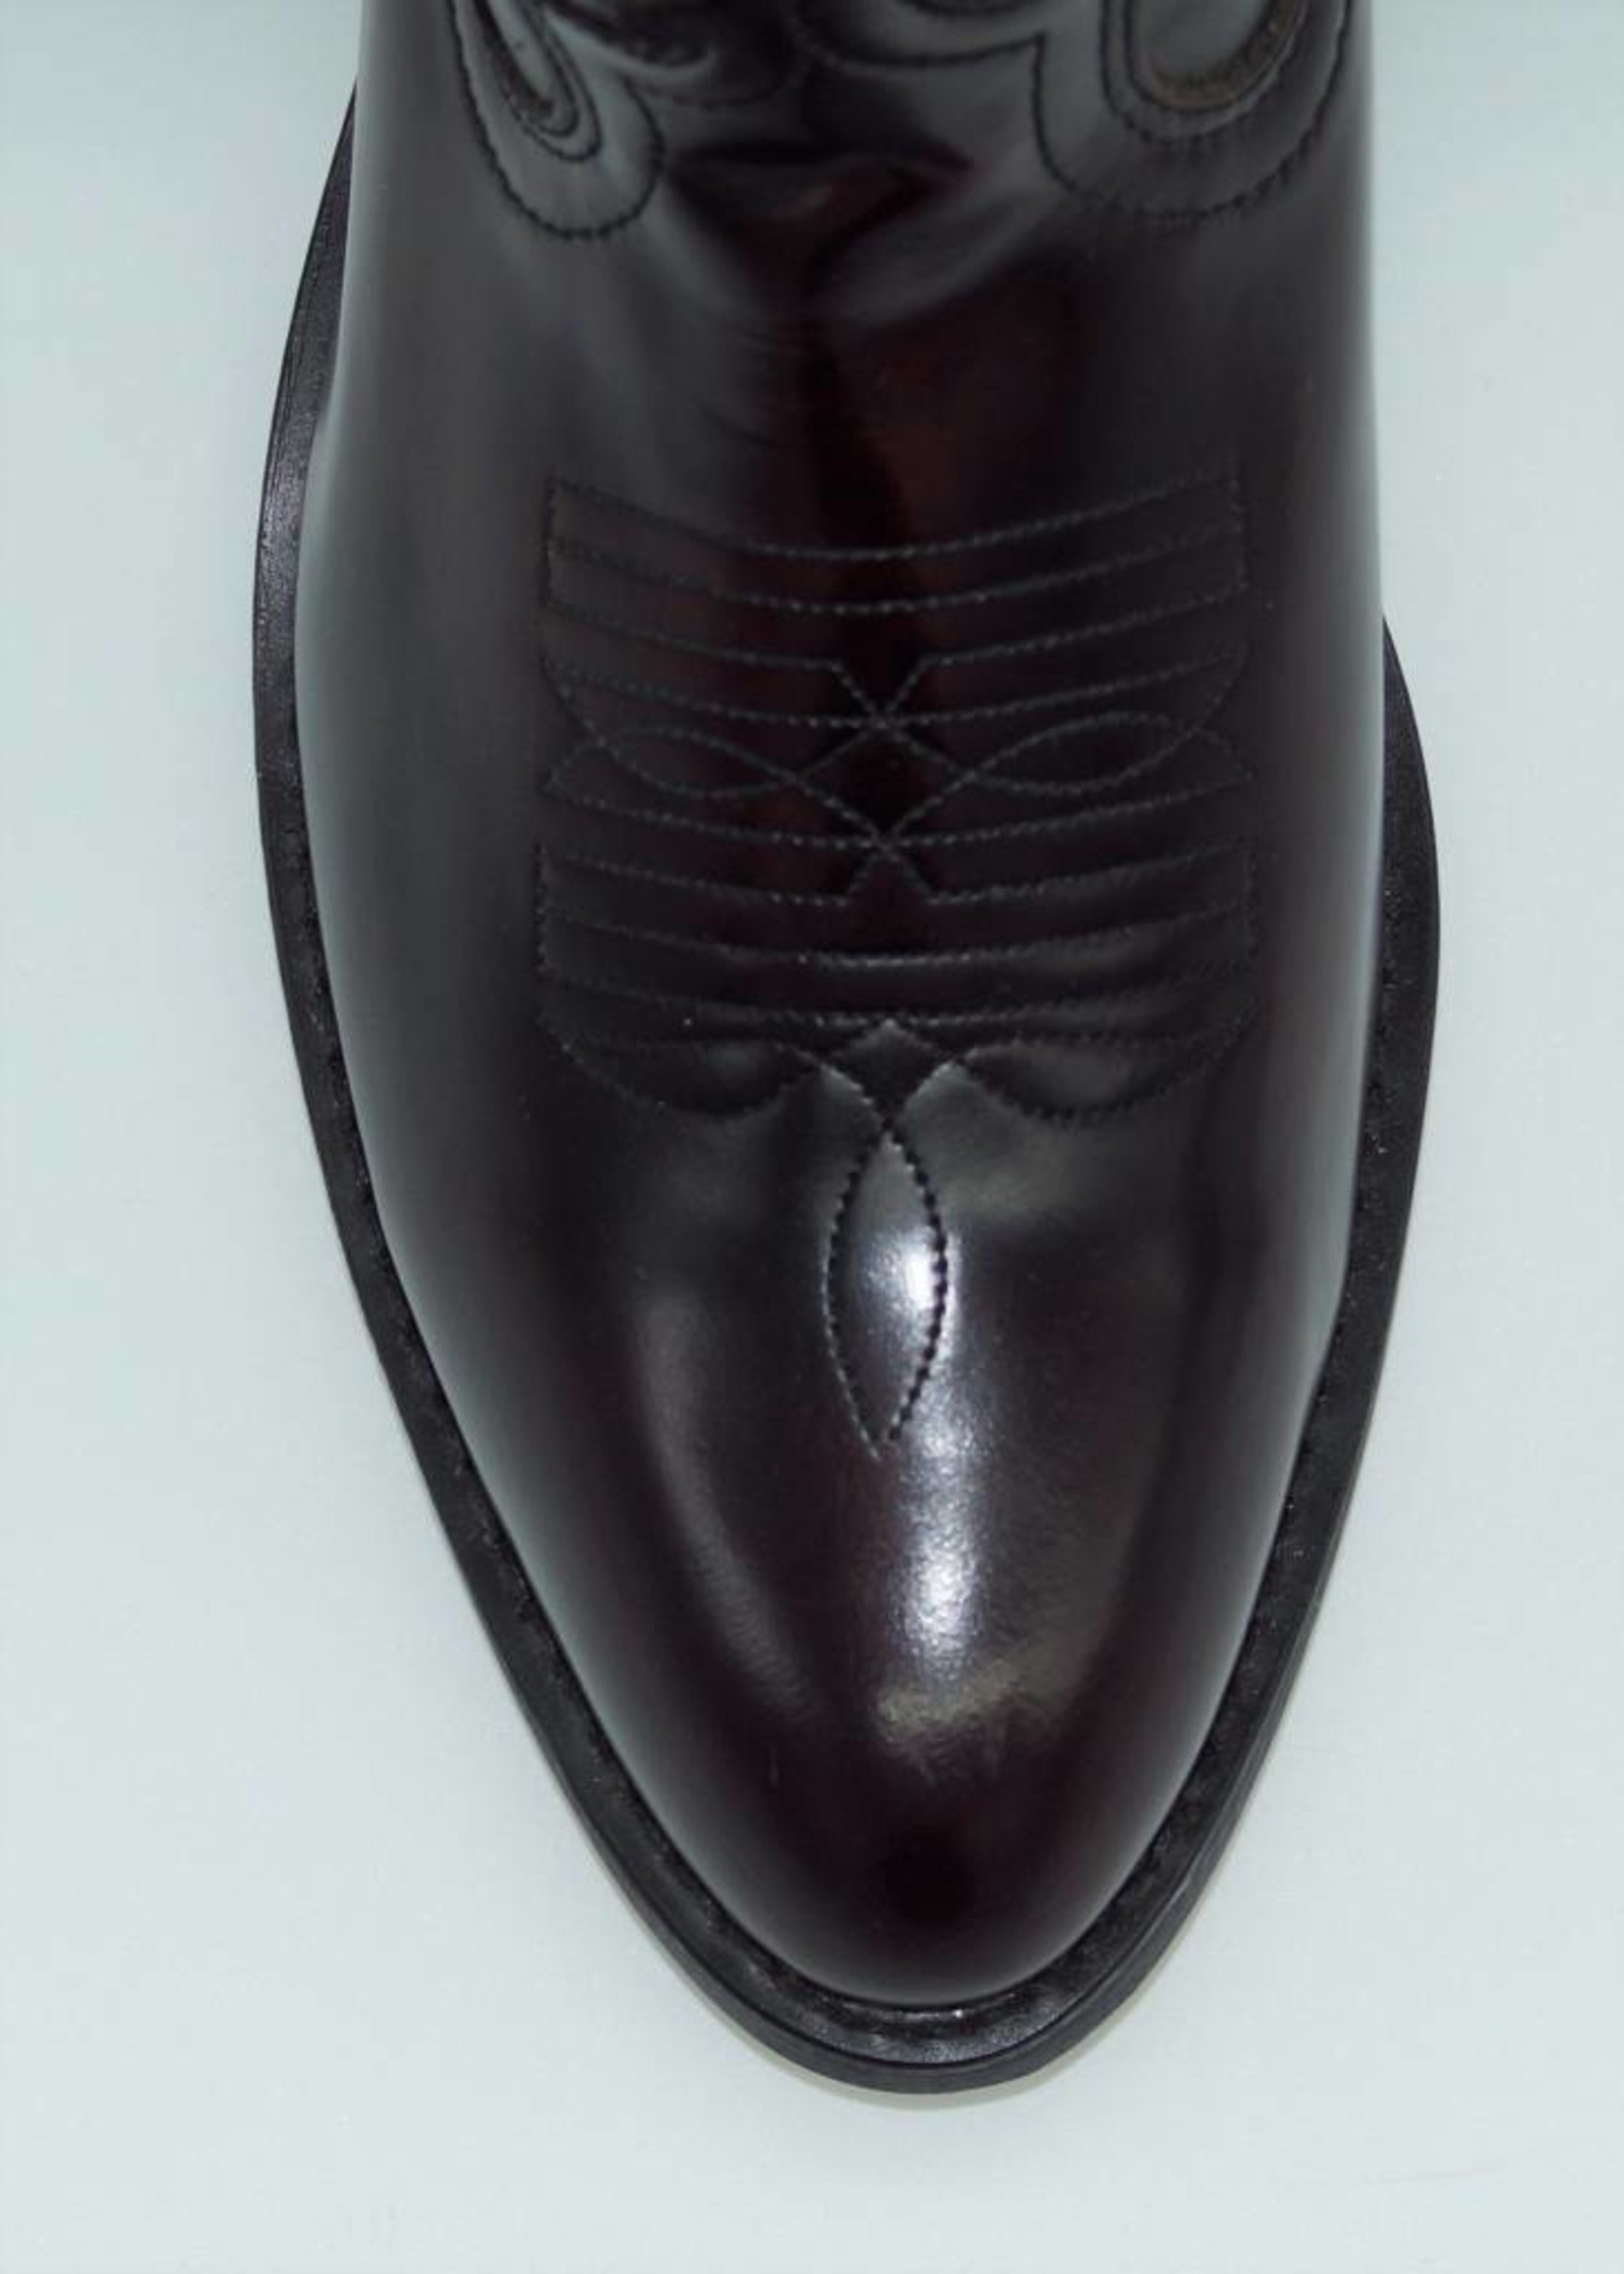 Laredo Men's London Black Cherry Leather Foot Western Boot 4216